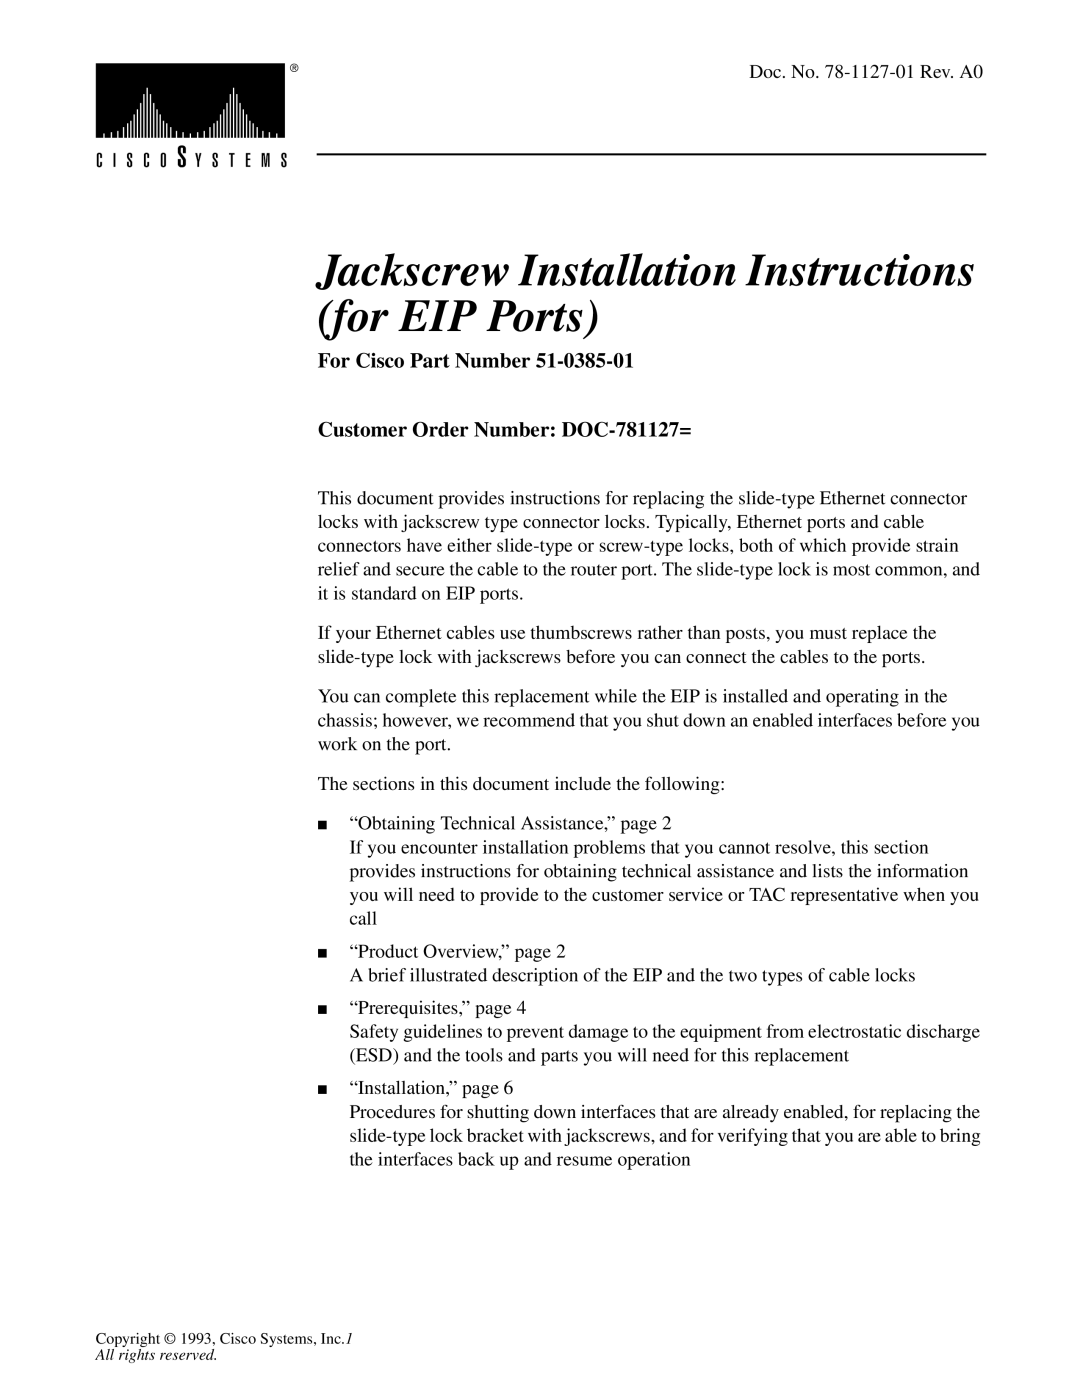 Cisco Systems installation instructions Jackscrew Installation Instructions for EIP Ports 